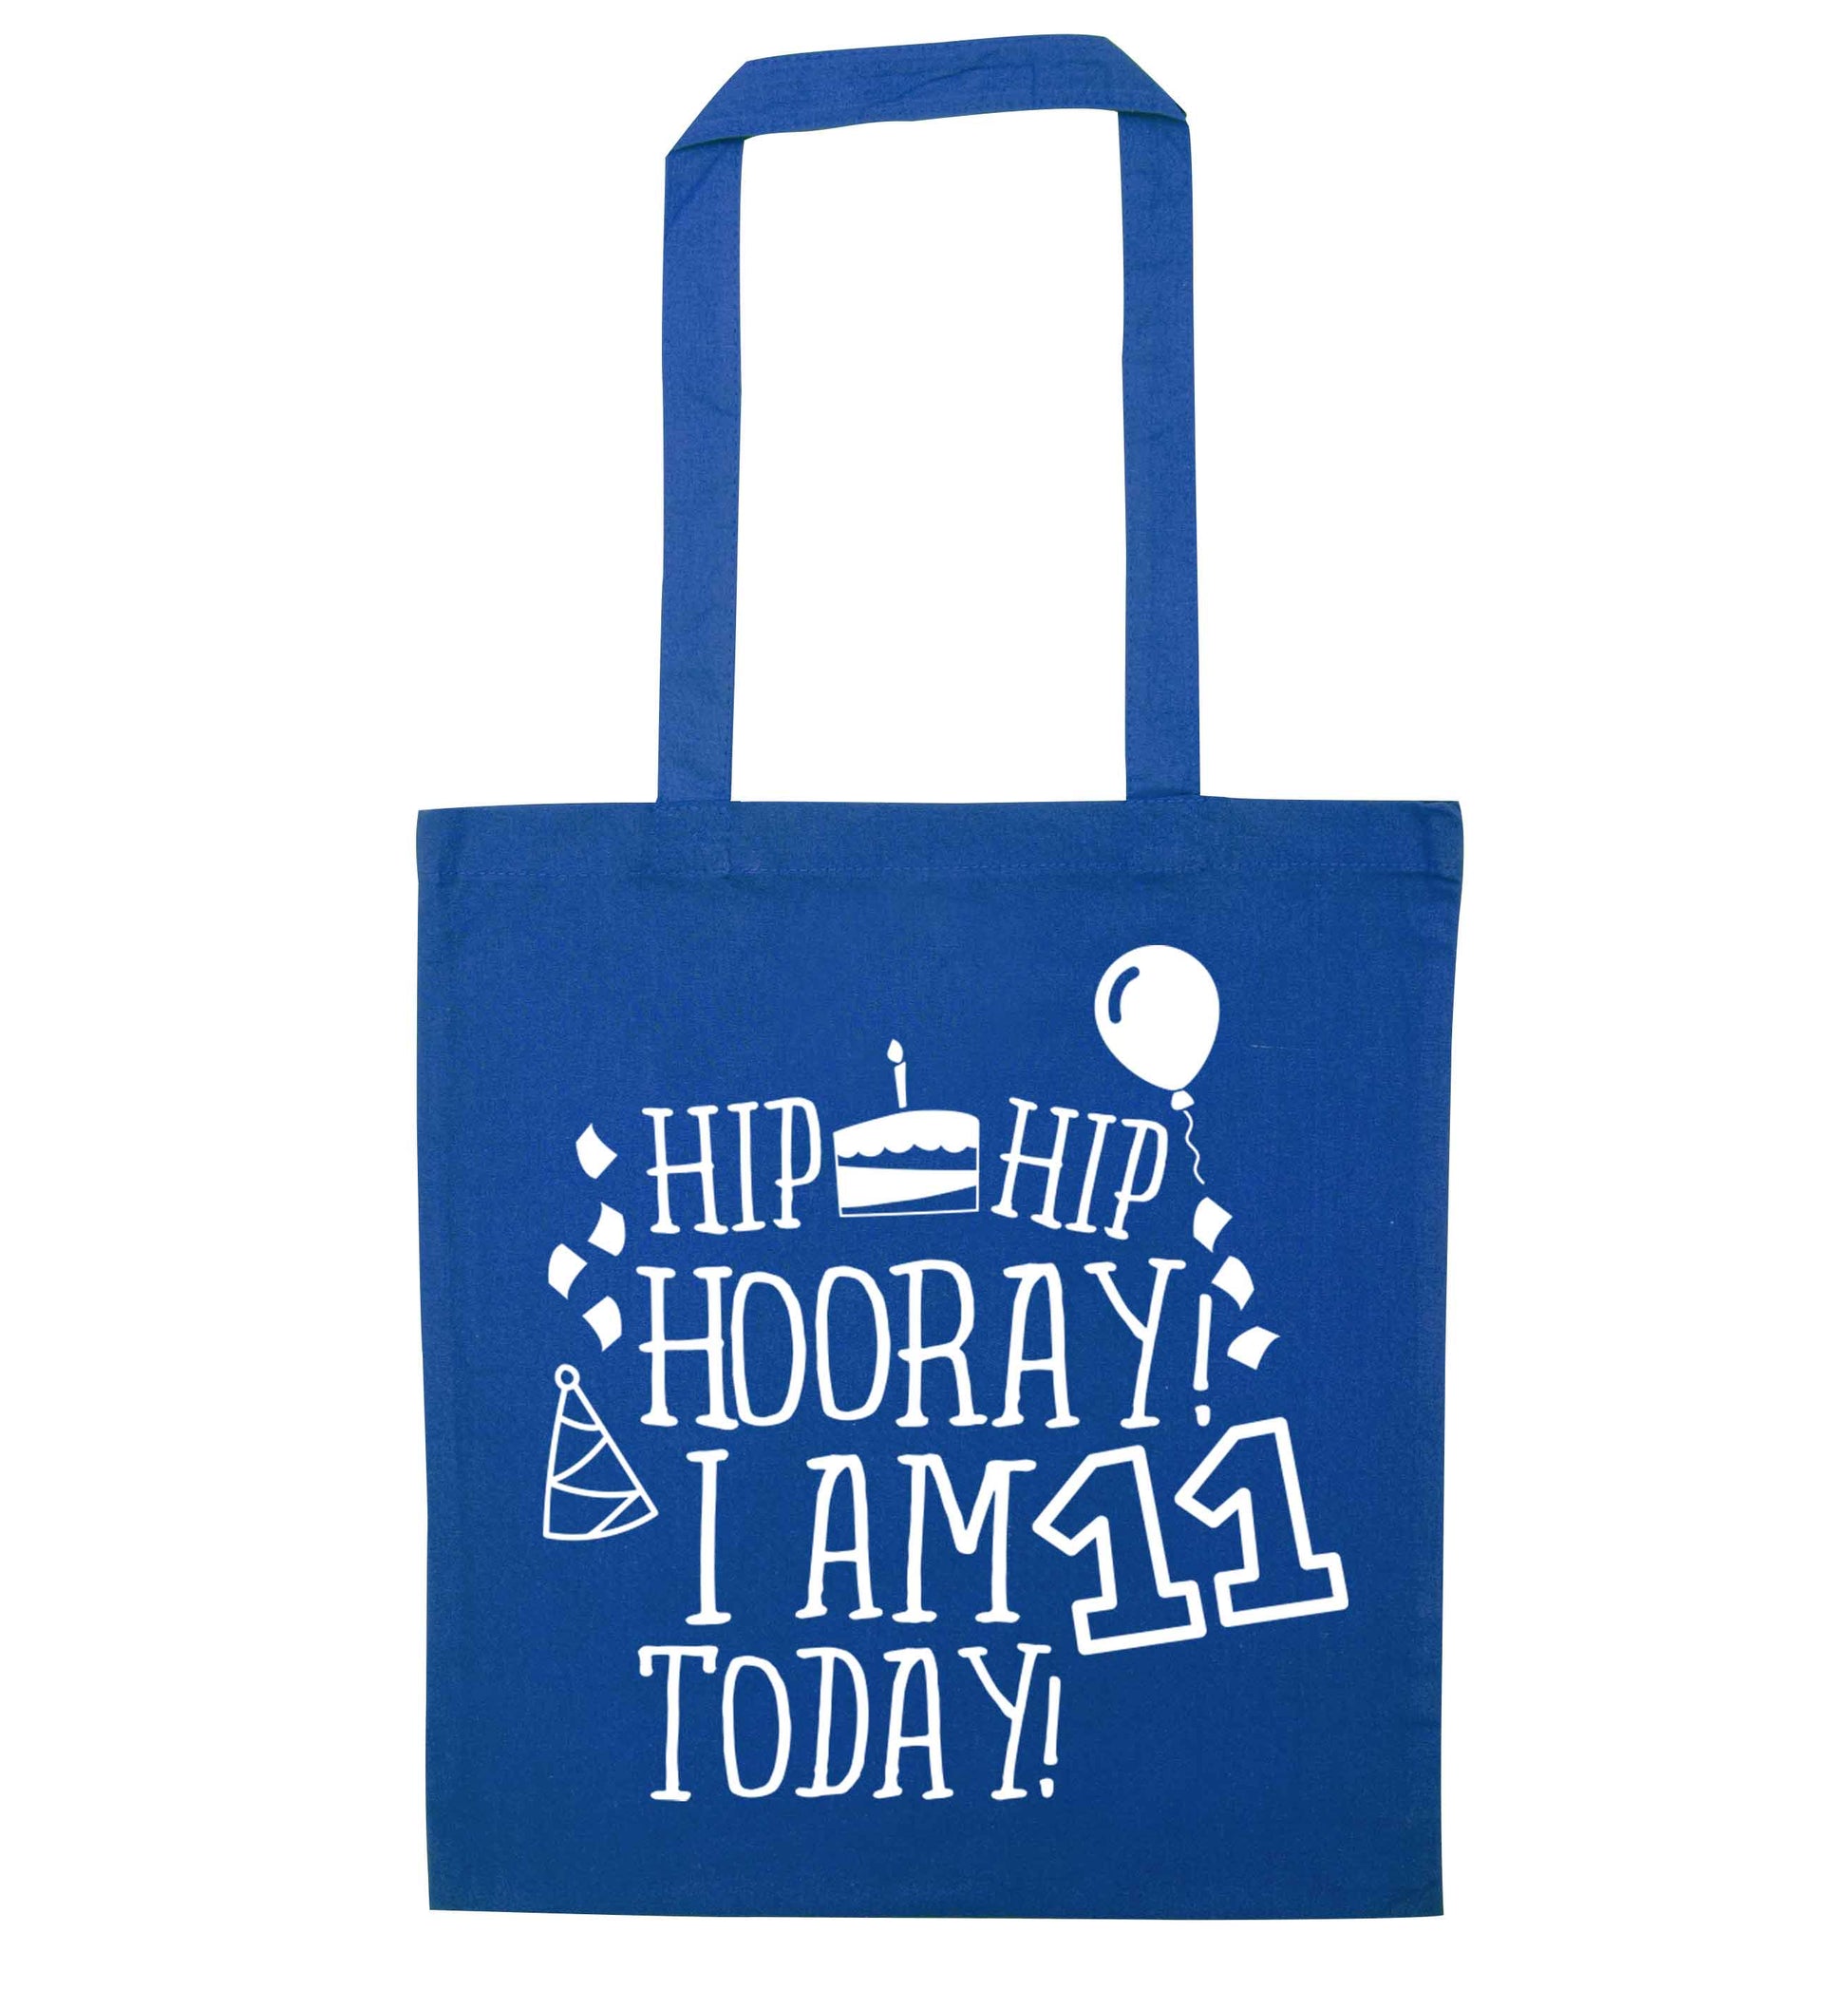 Hip hip hooray I am eleven today! blue tote bag